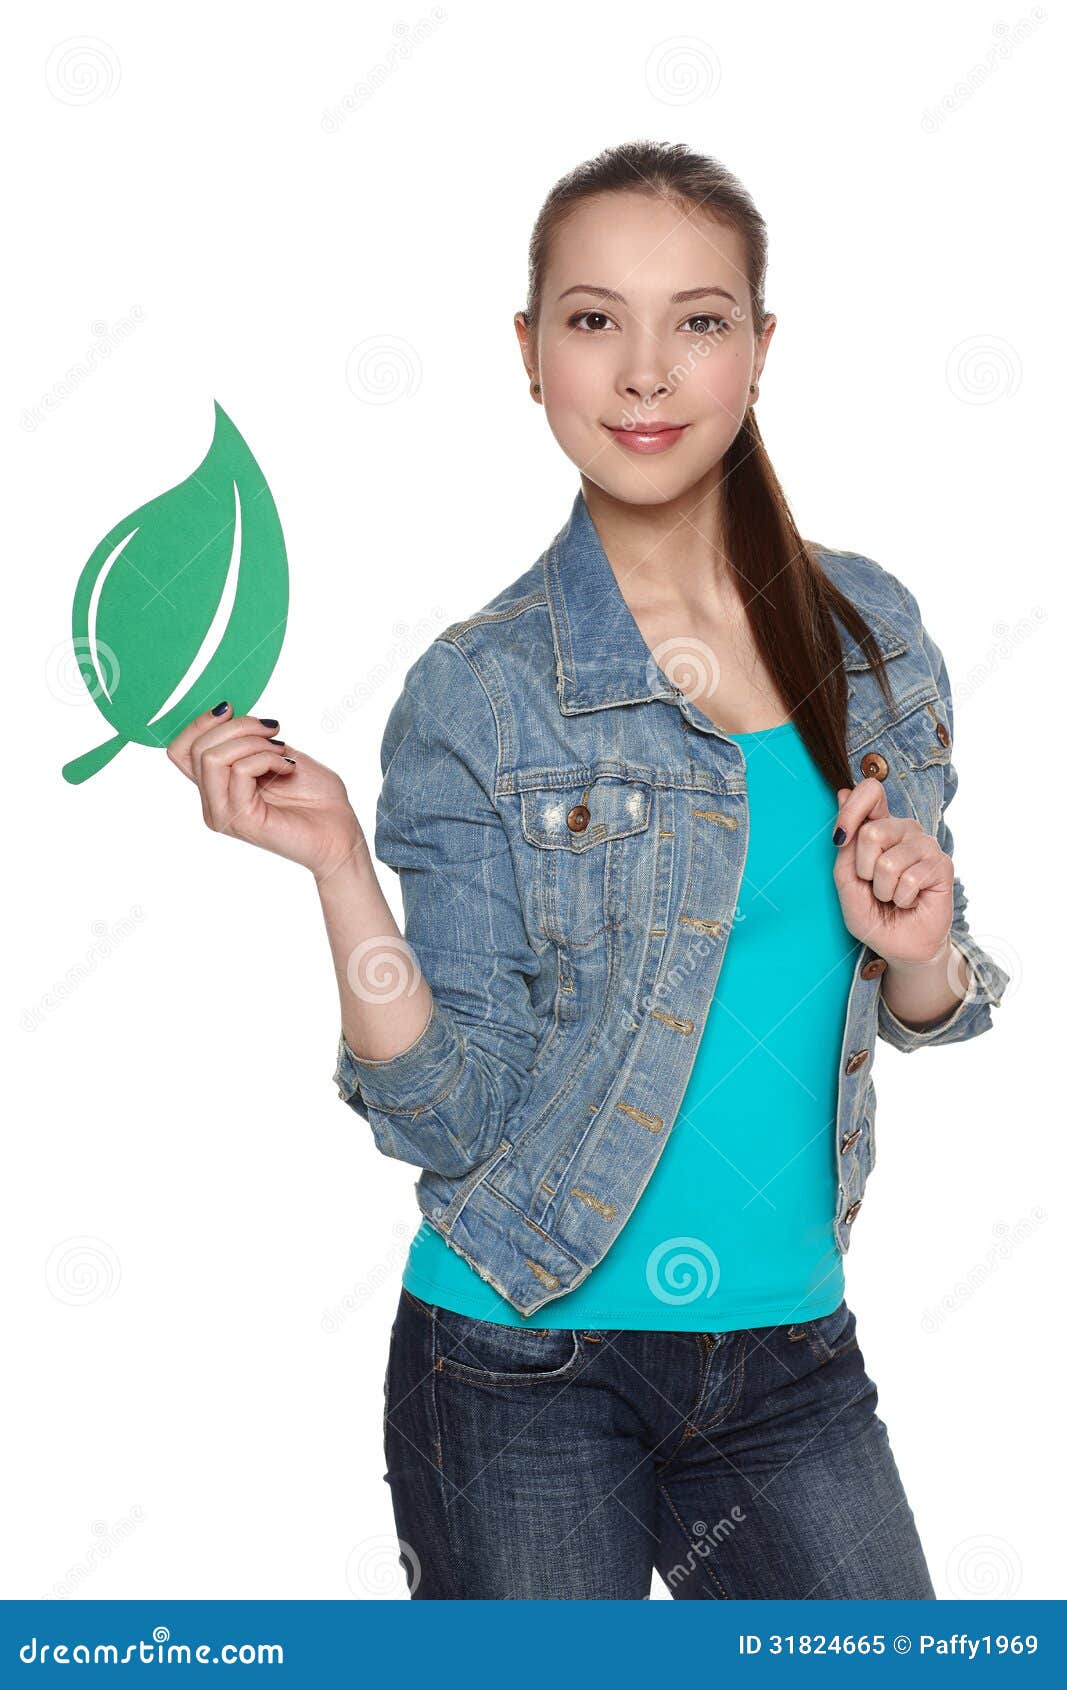 green leaf teen movies